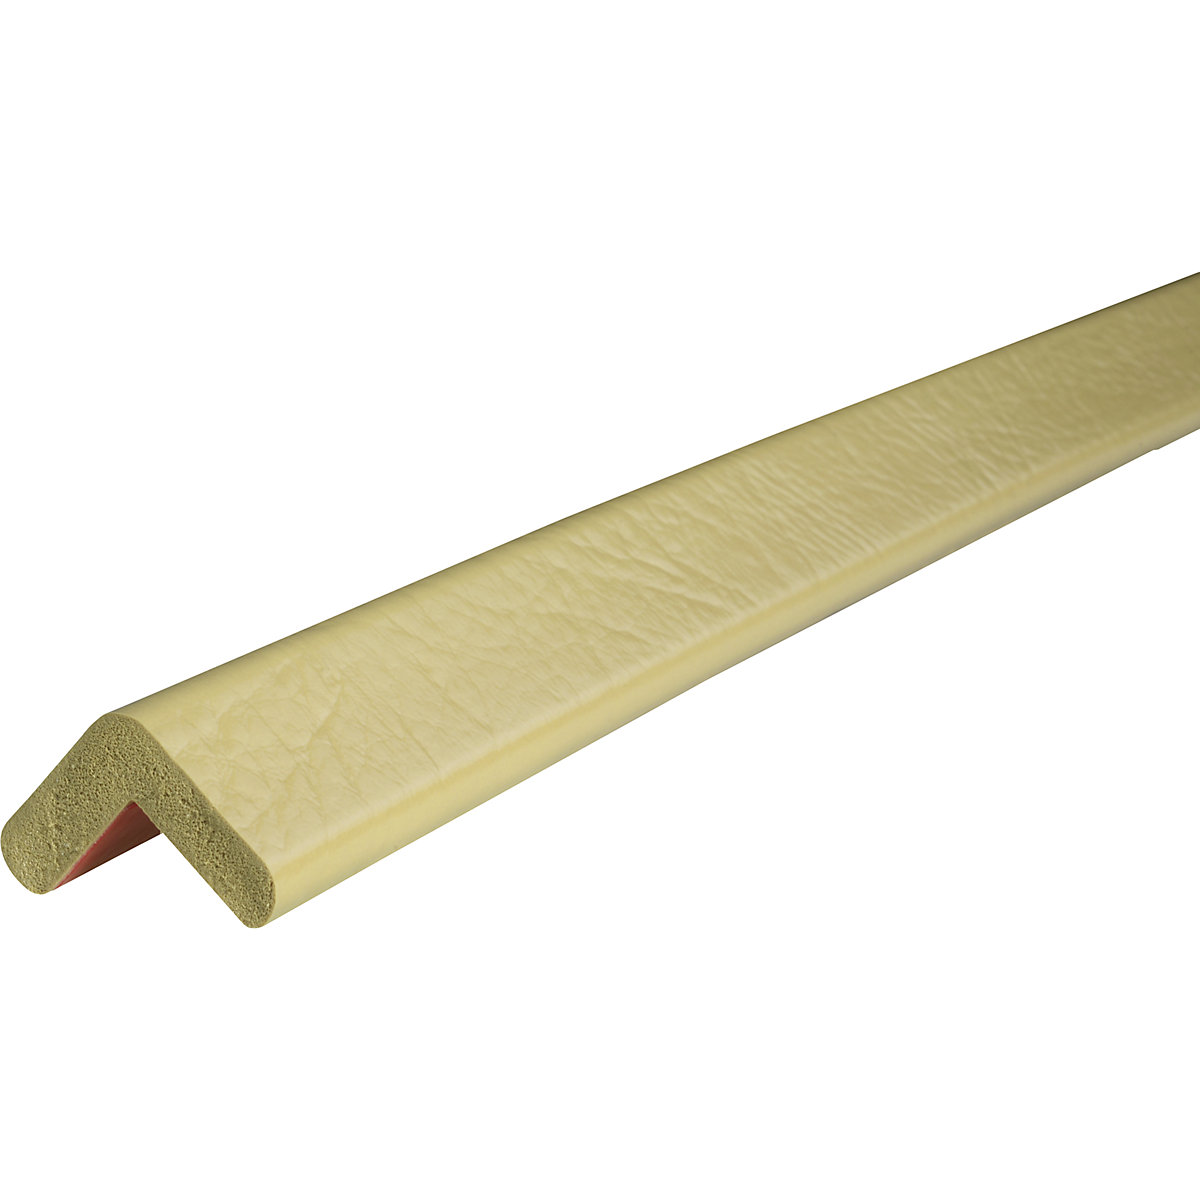 Knuffi®-hoekbescherming – SHG, type E, stuk van 1 m, beige-19